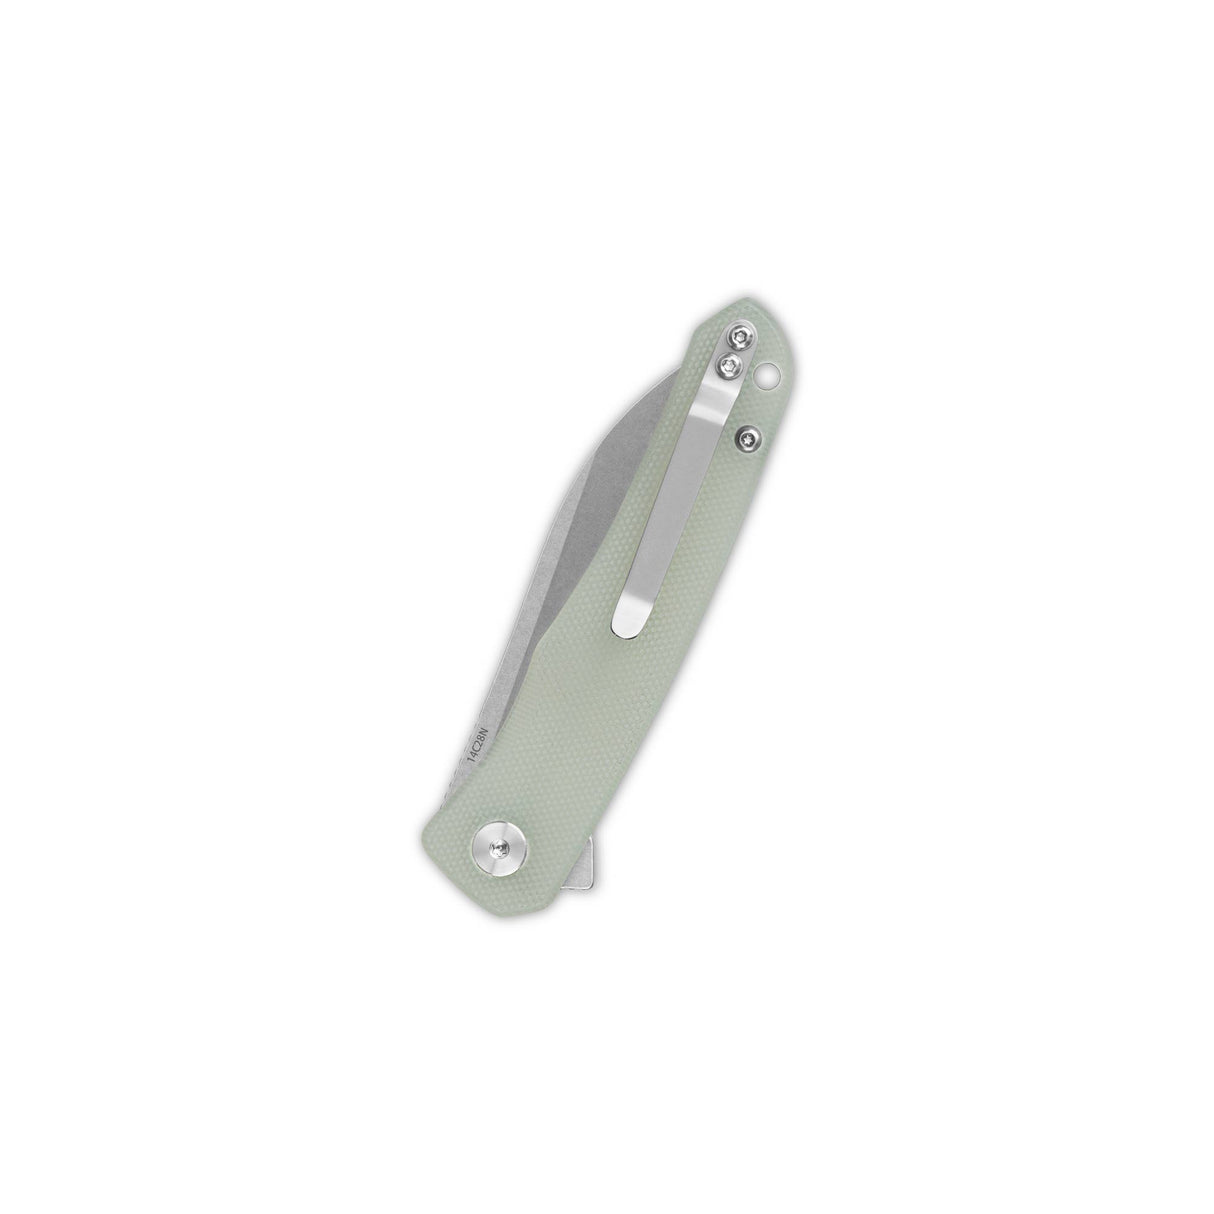 QSP Otter Liner Lock Pocket Knife 14C28N Blade Jade G10 Handle